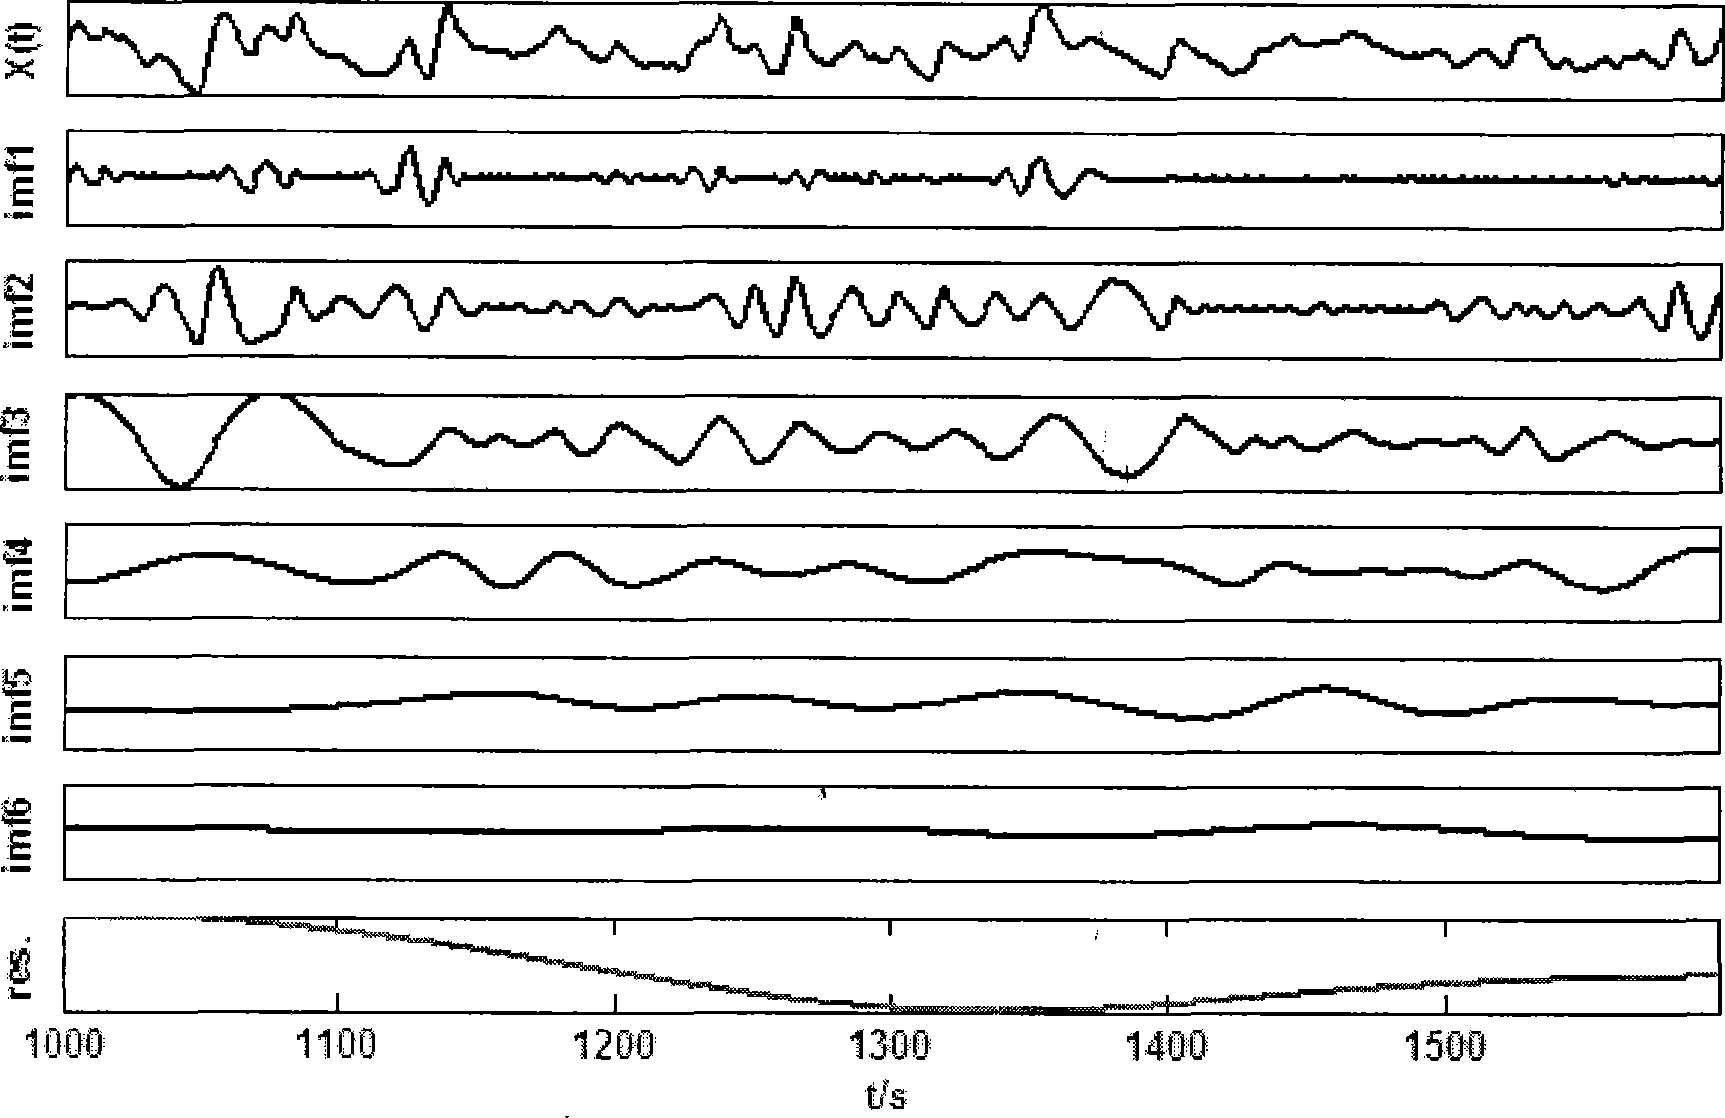 Measurement method for detecting sleep apnoea with ECG signal